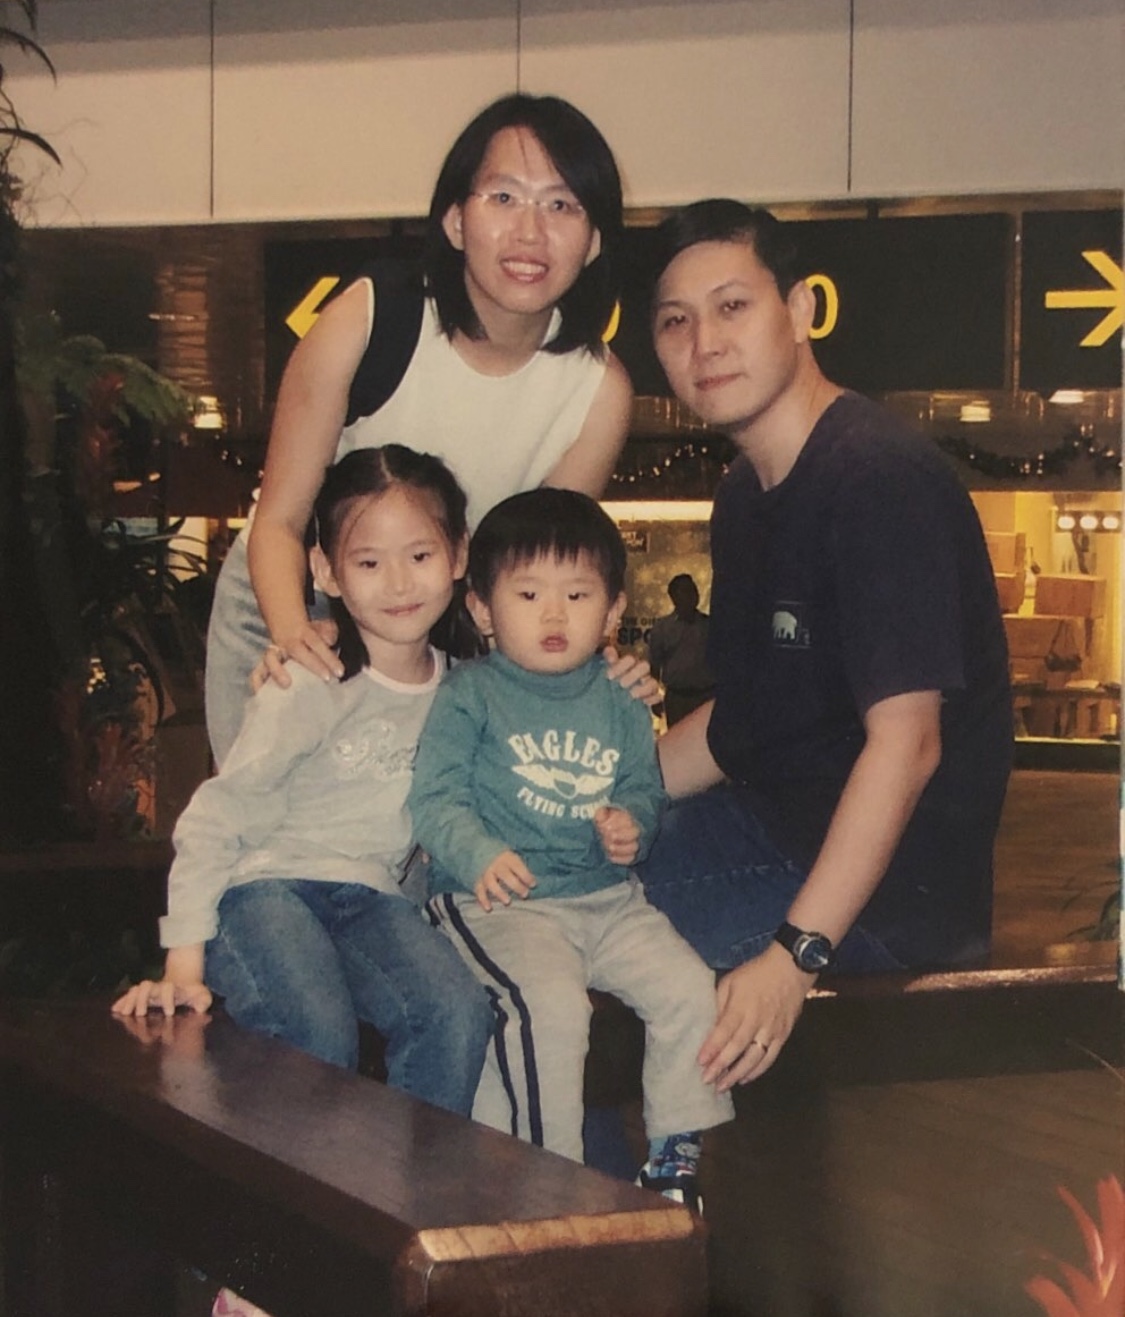 family photo of 4